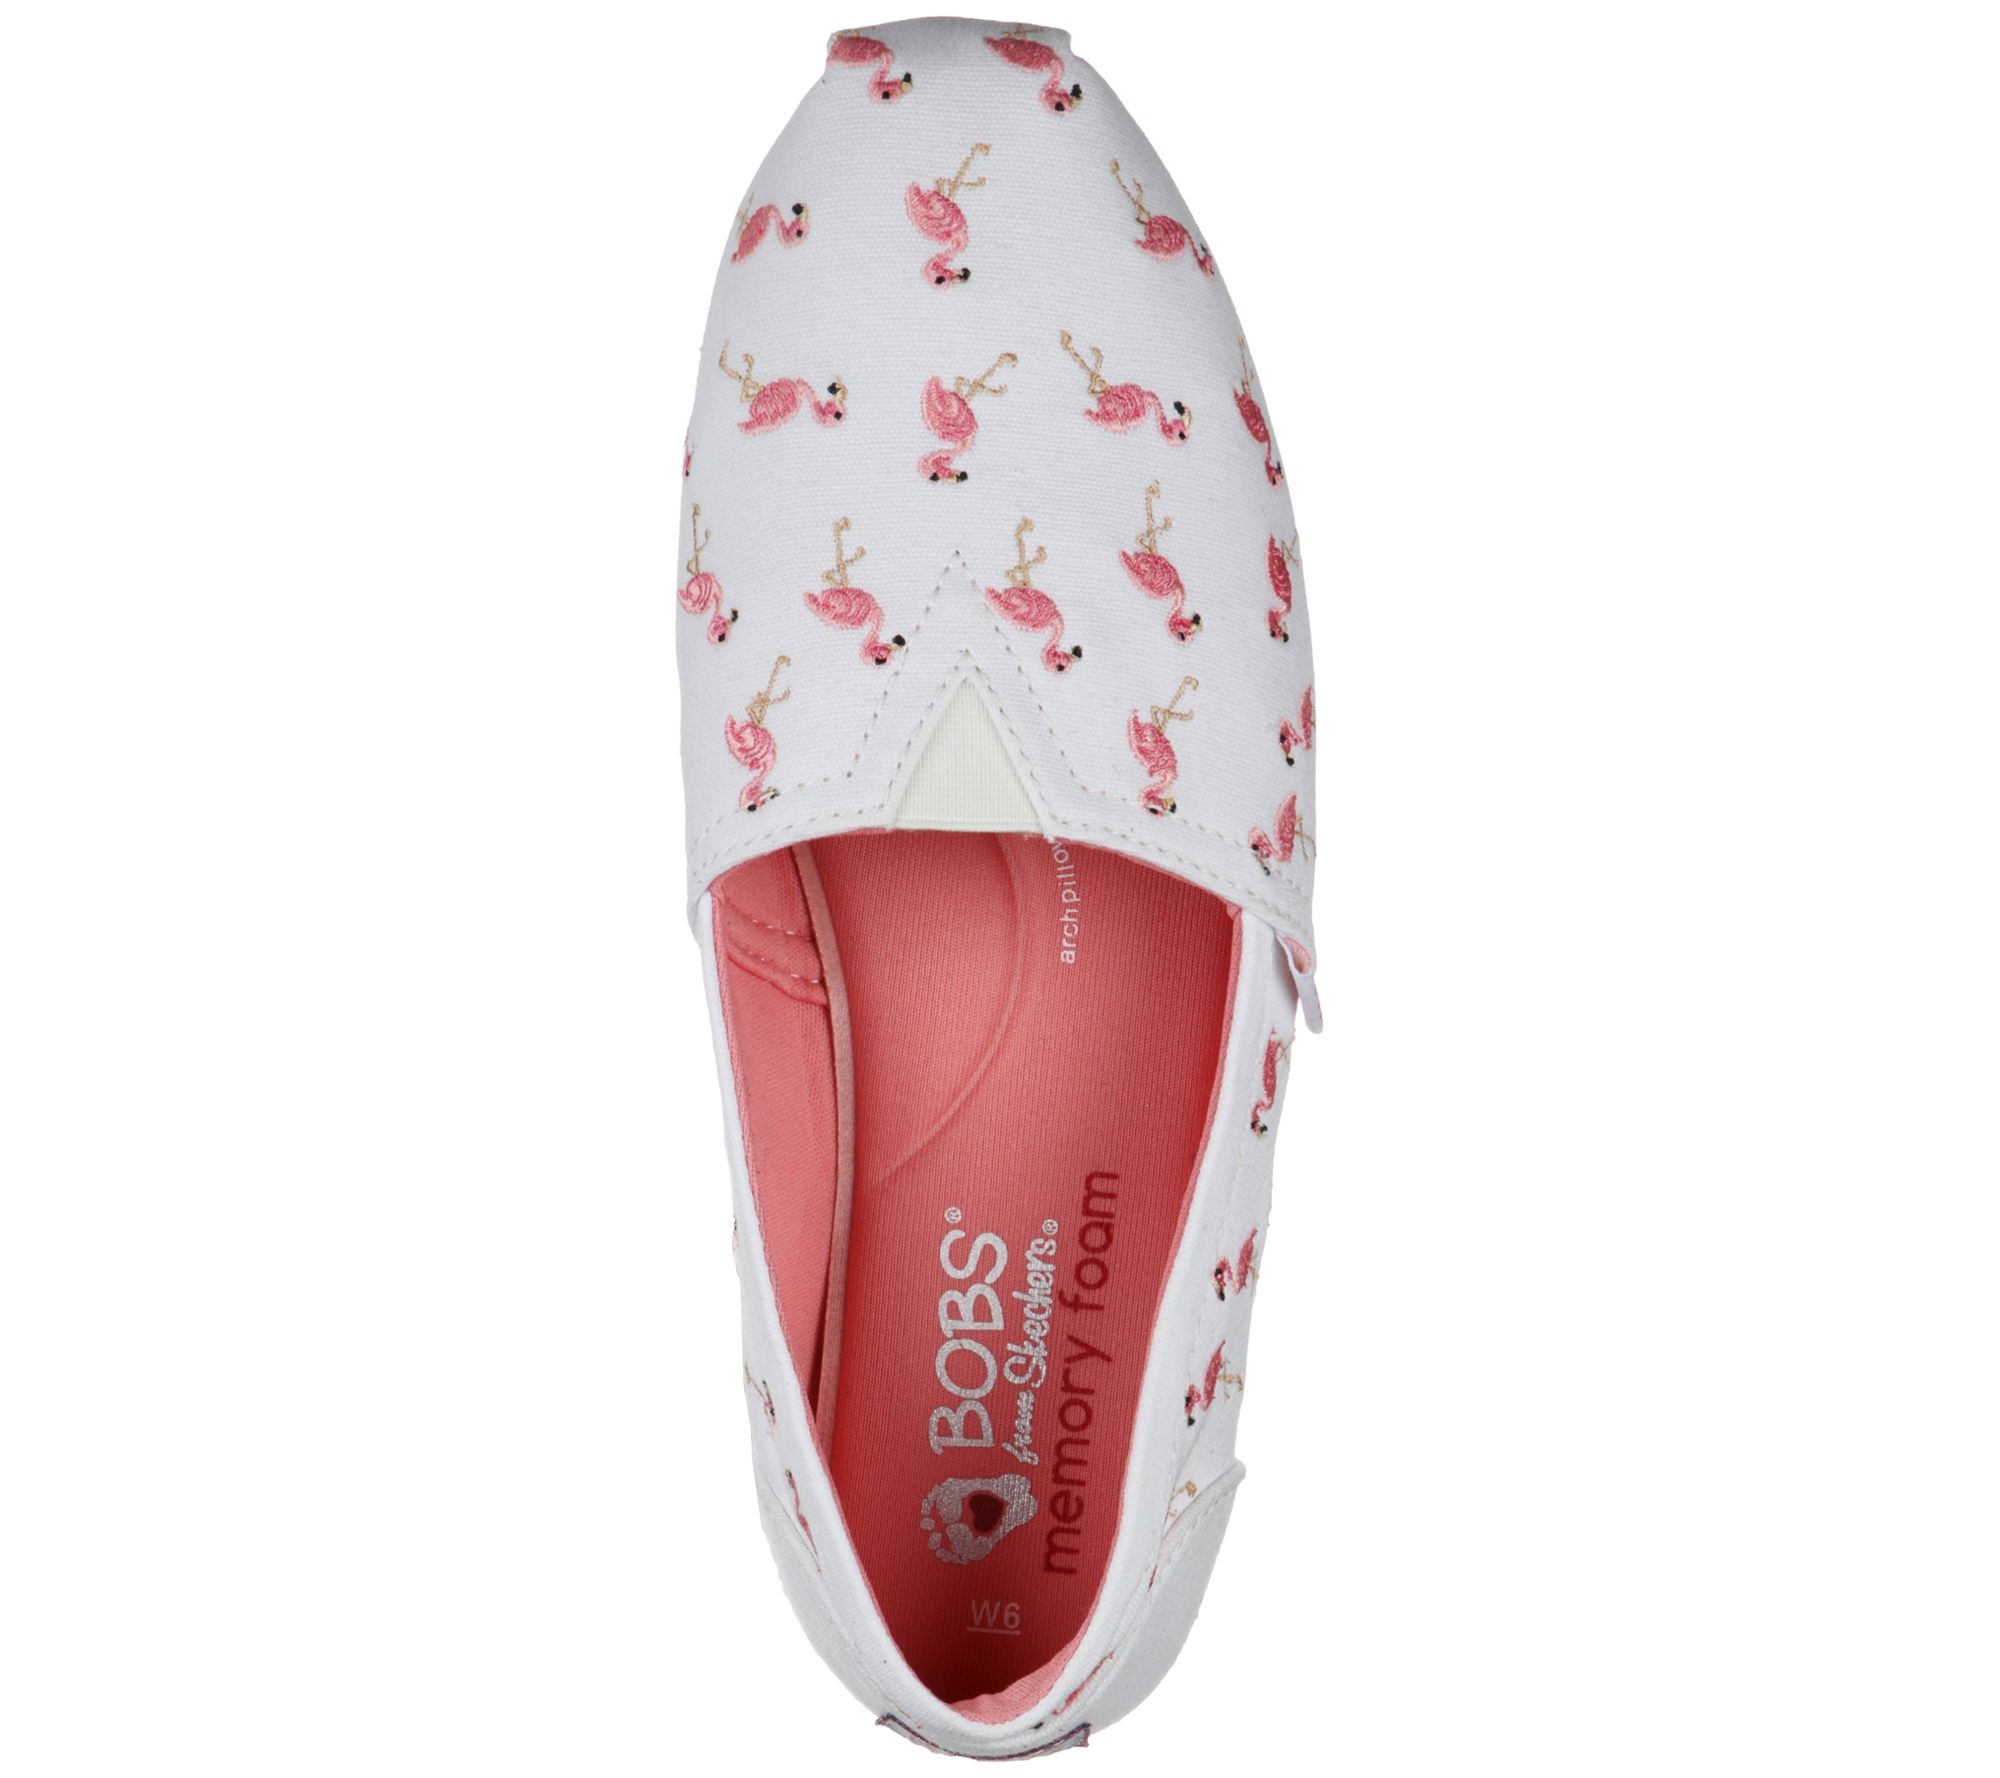 bobs flamingo shoes